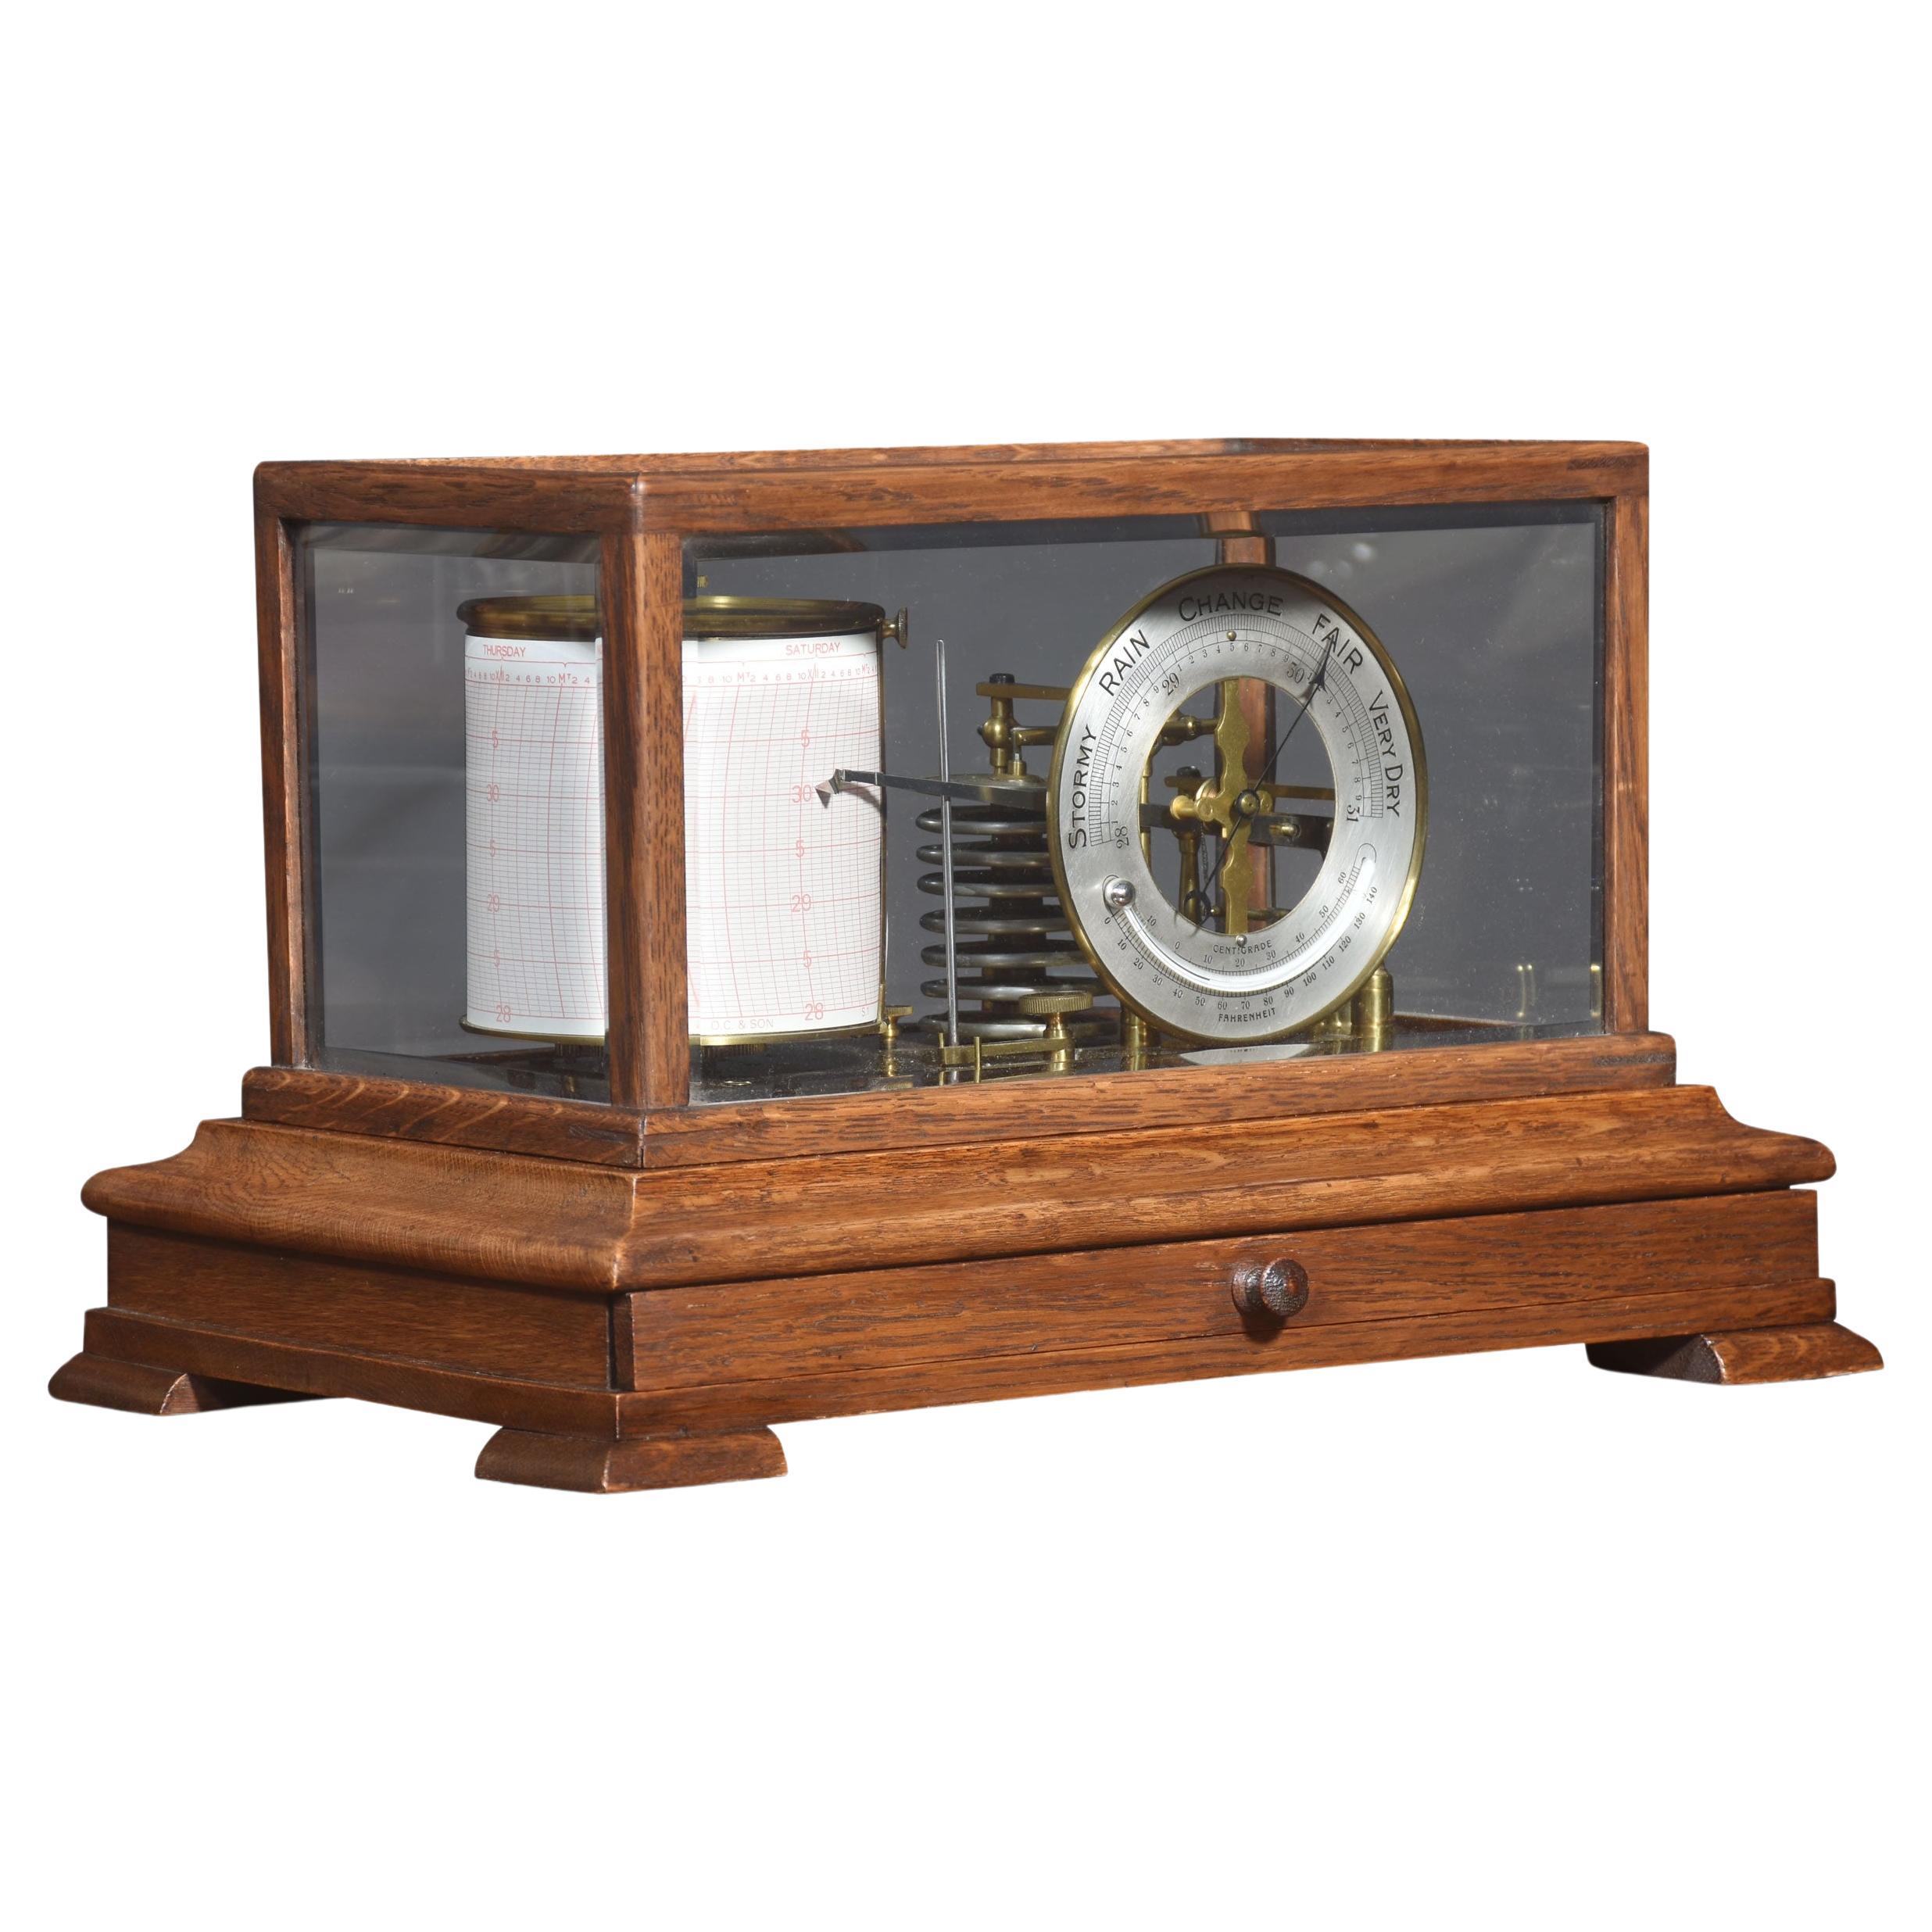 Oak cased barograph and barometer For Sale